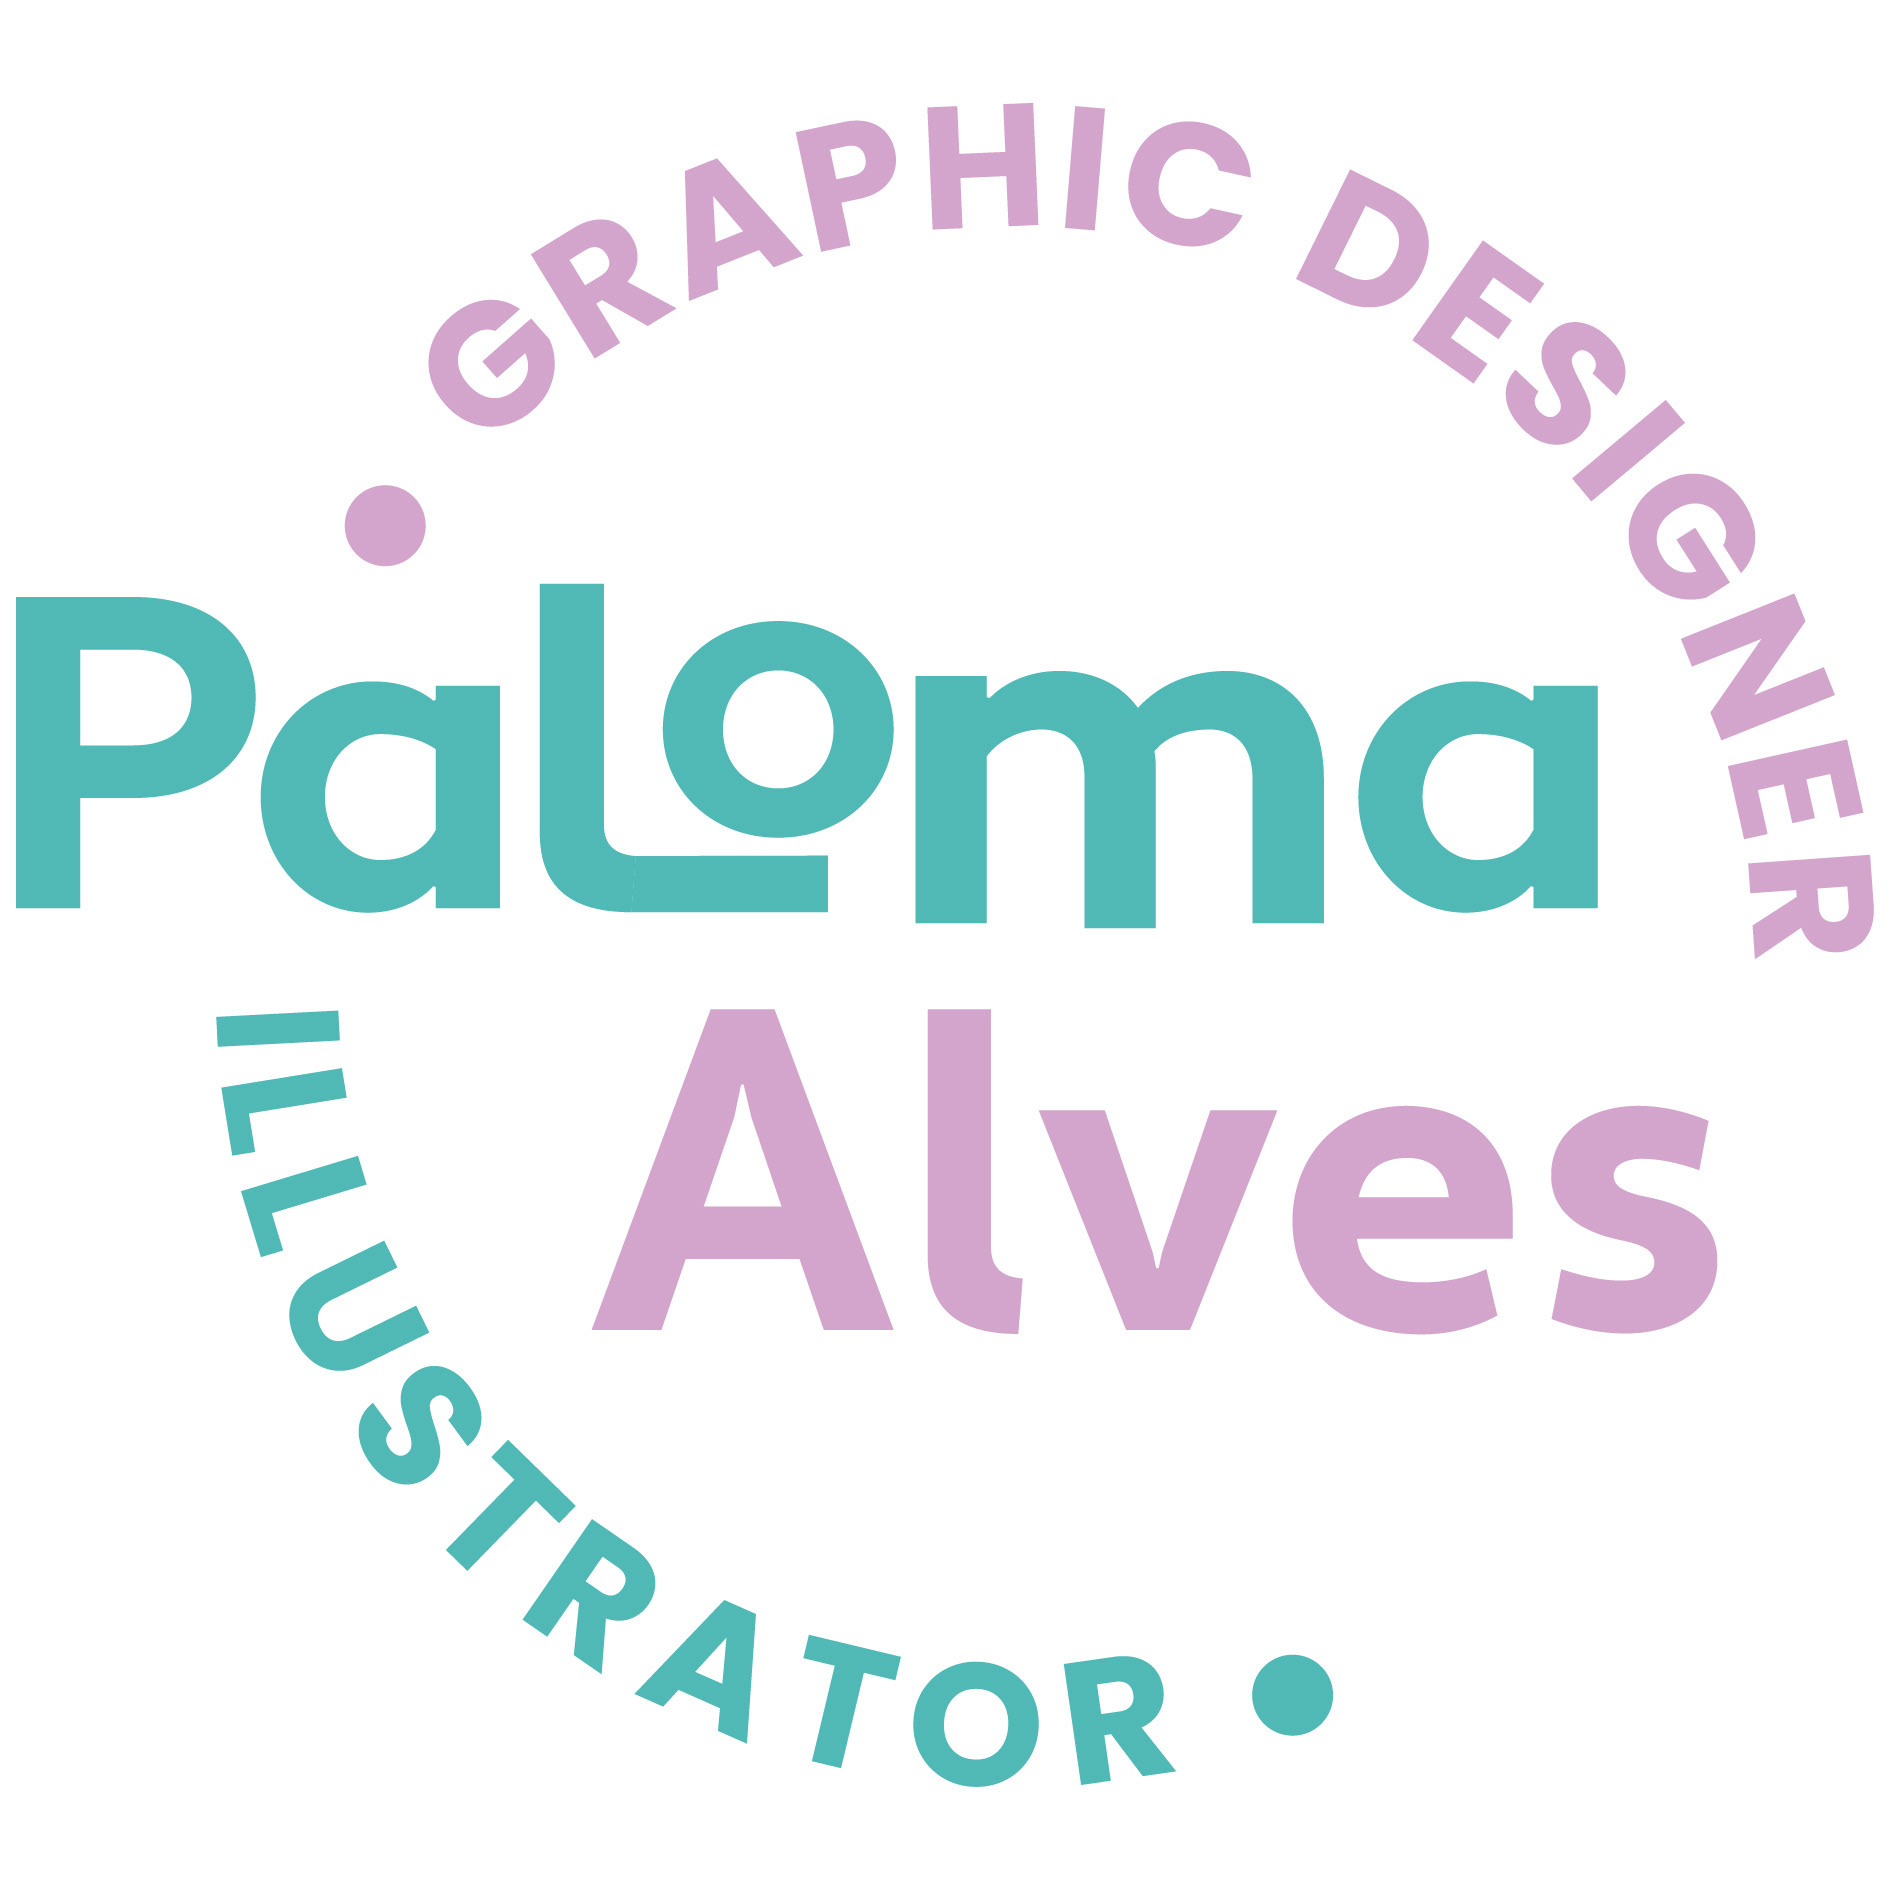 Paloma Alves Graphic Designer and Illustrator